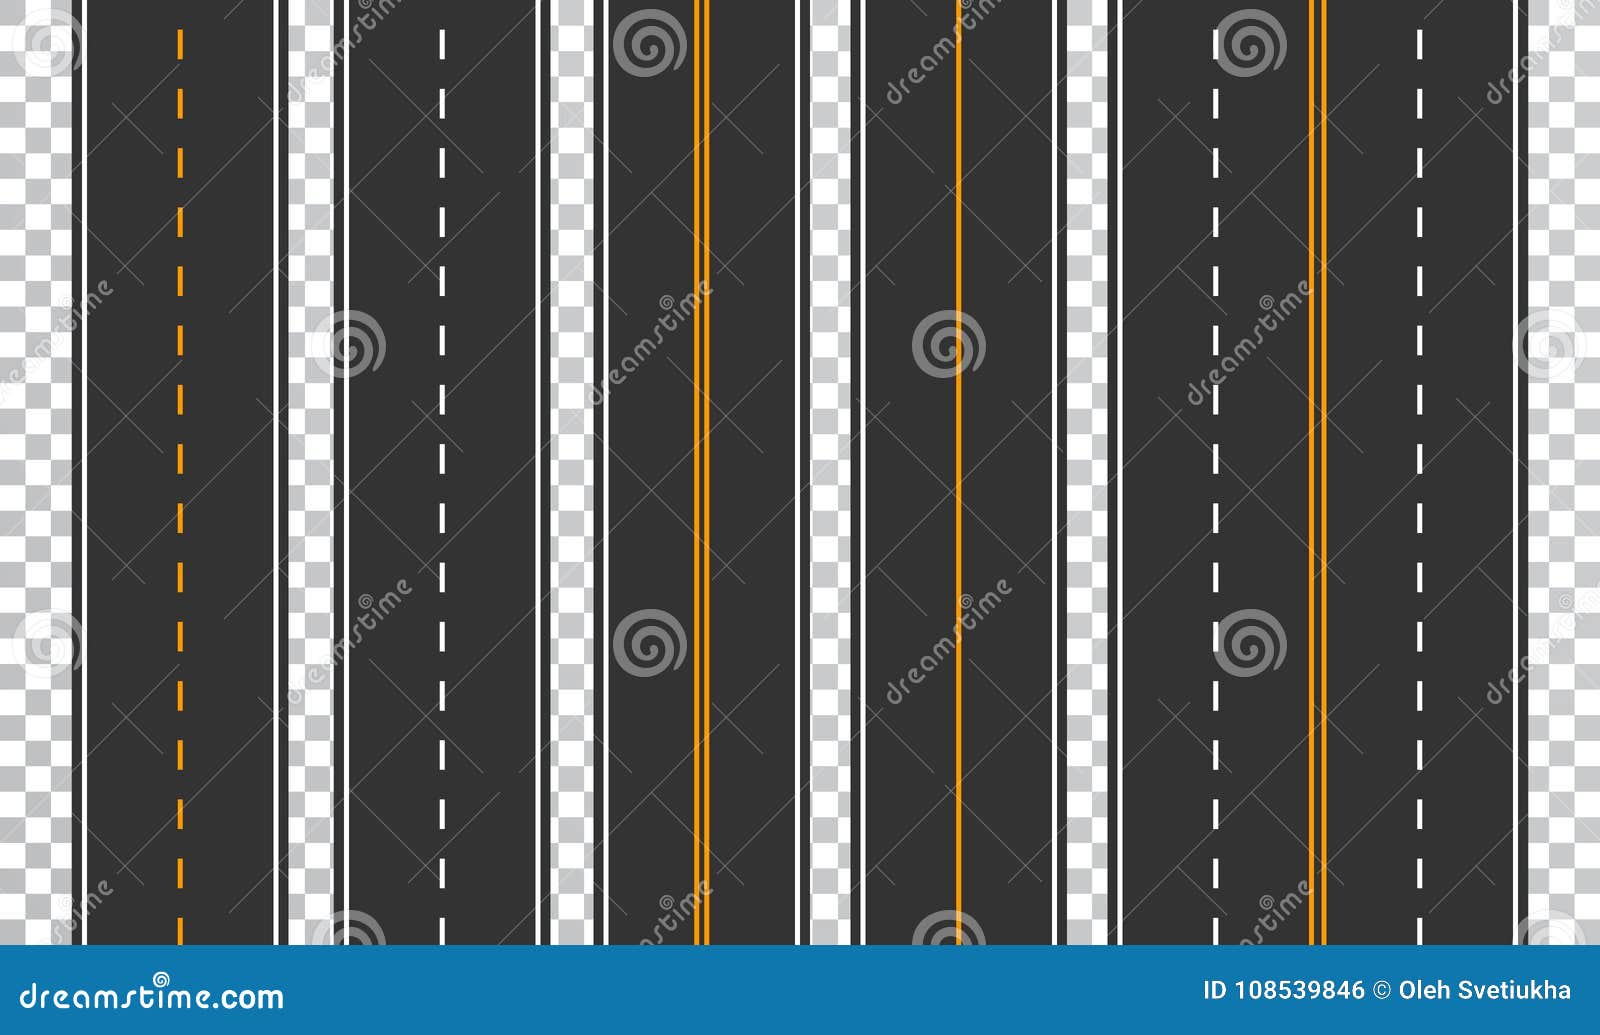 template set of straight asphalt roads. seamless road background.  eps 10